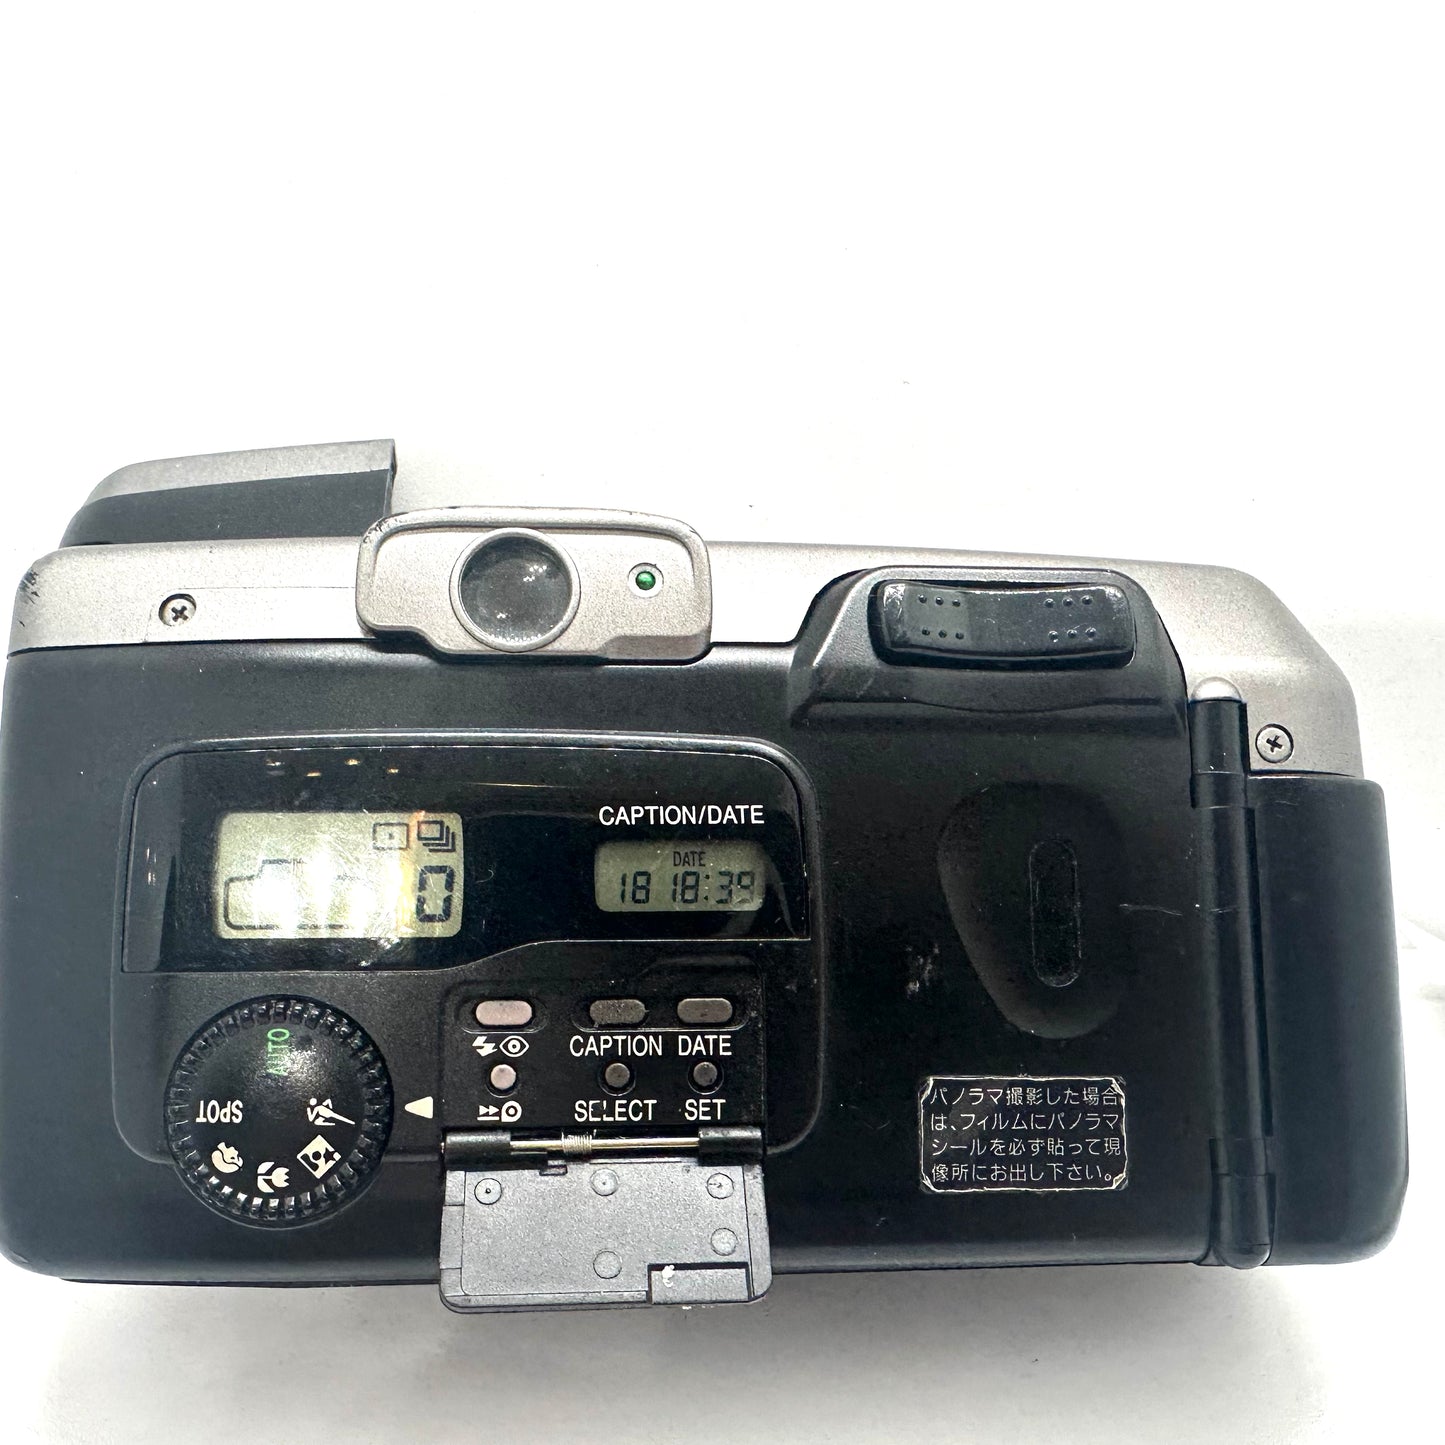 Canon Autoboy Luna Panorama AiAF 35mm 菲林相機